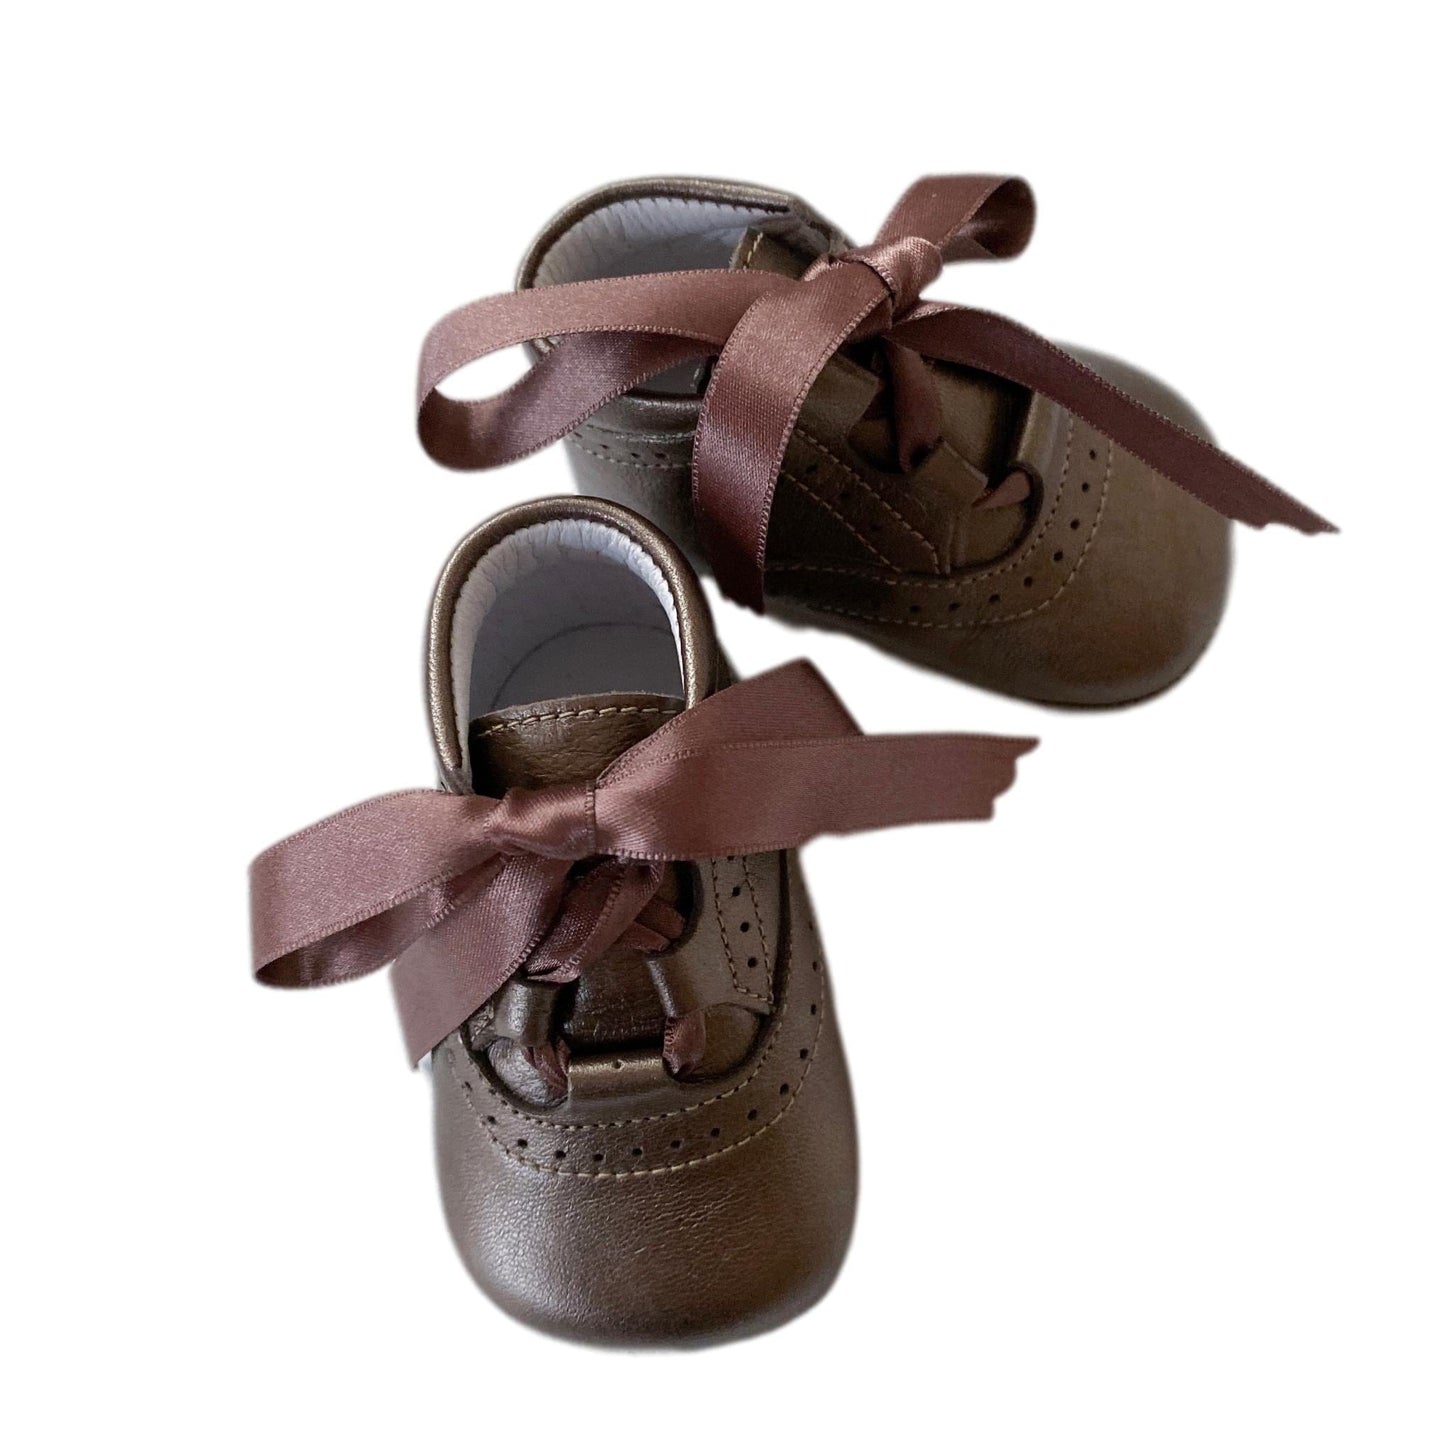 Metallic Brown Calfskin Leather Prewalkers - Petit Maison Kids